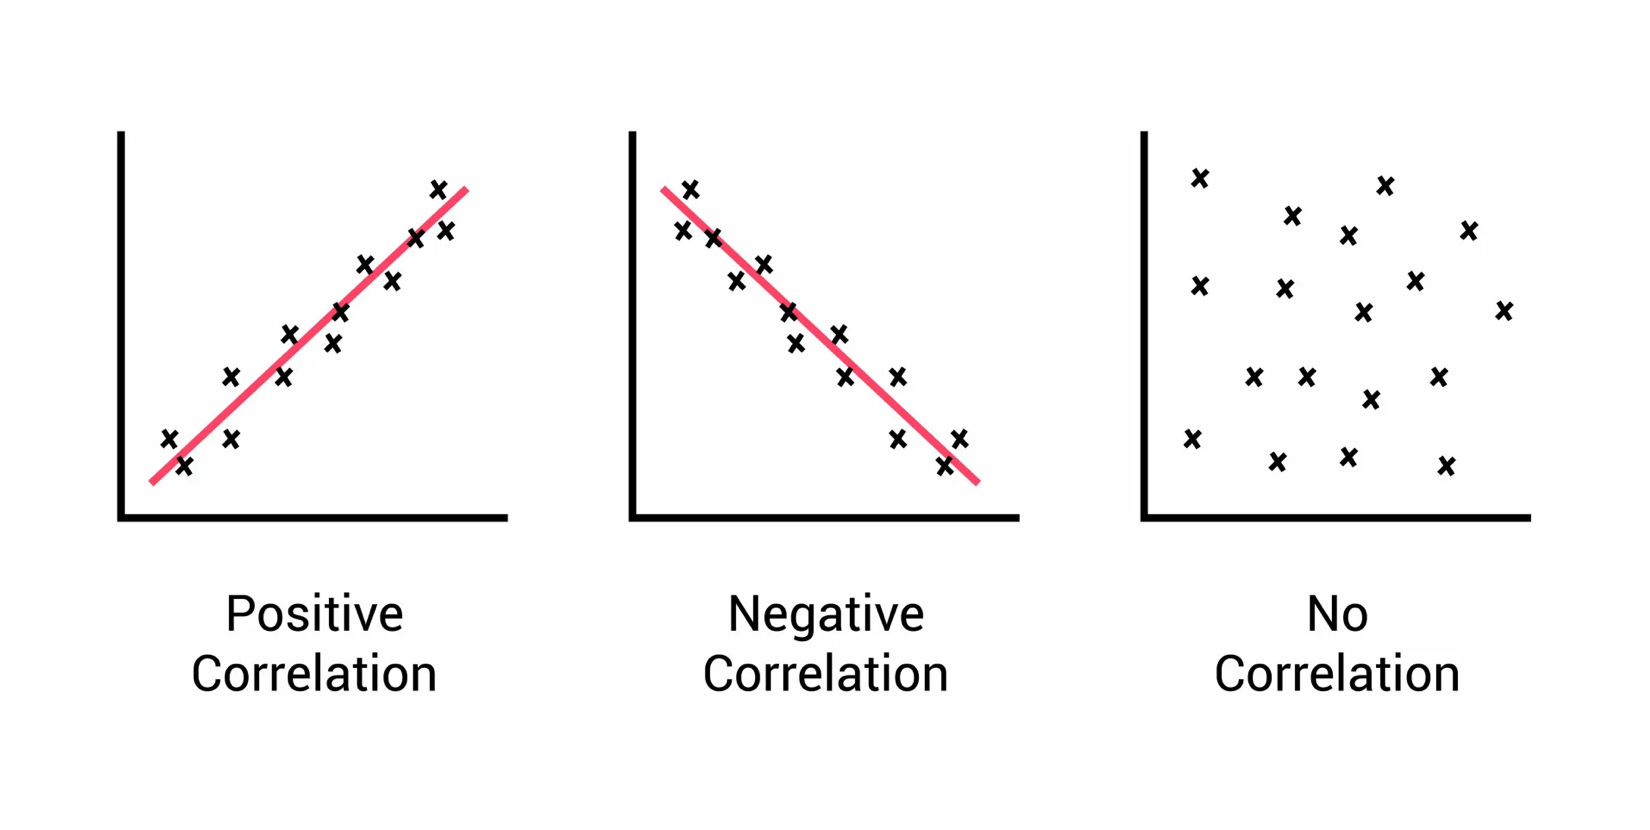 Positive Correlation vs. Negative Correlation vs. No Correlation